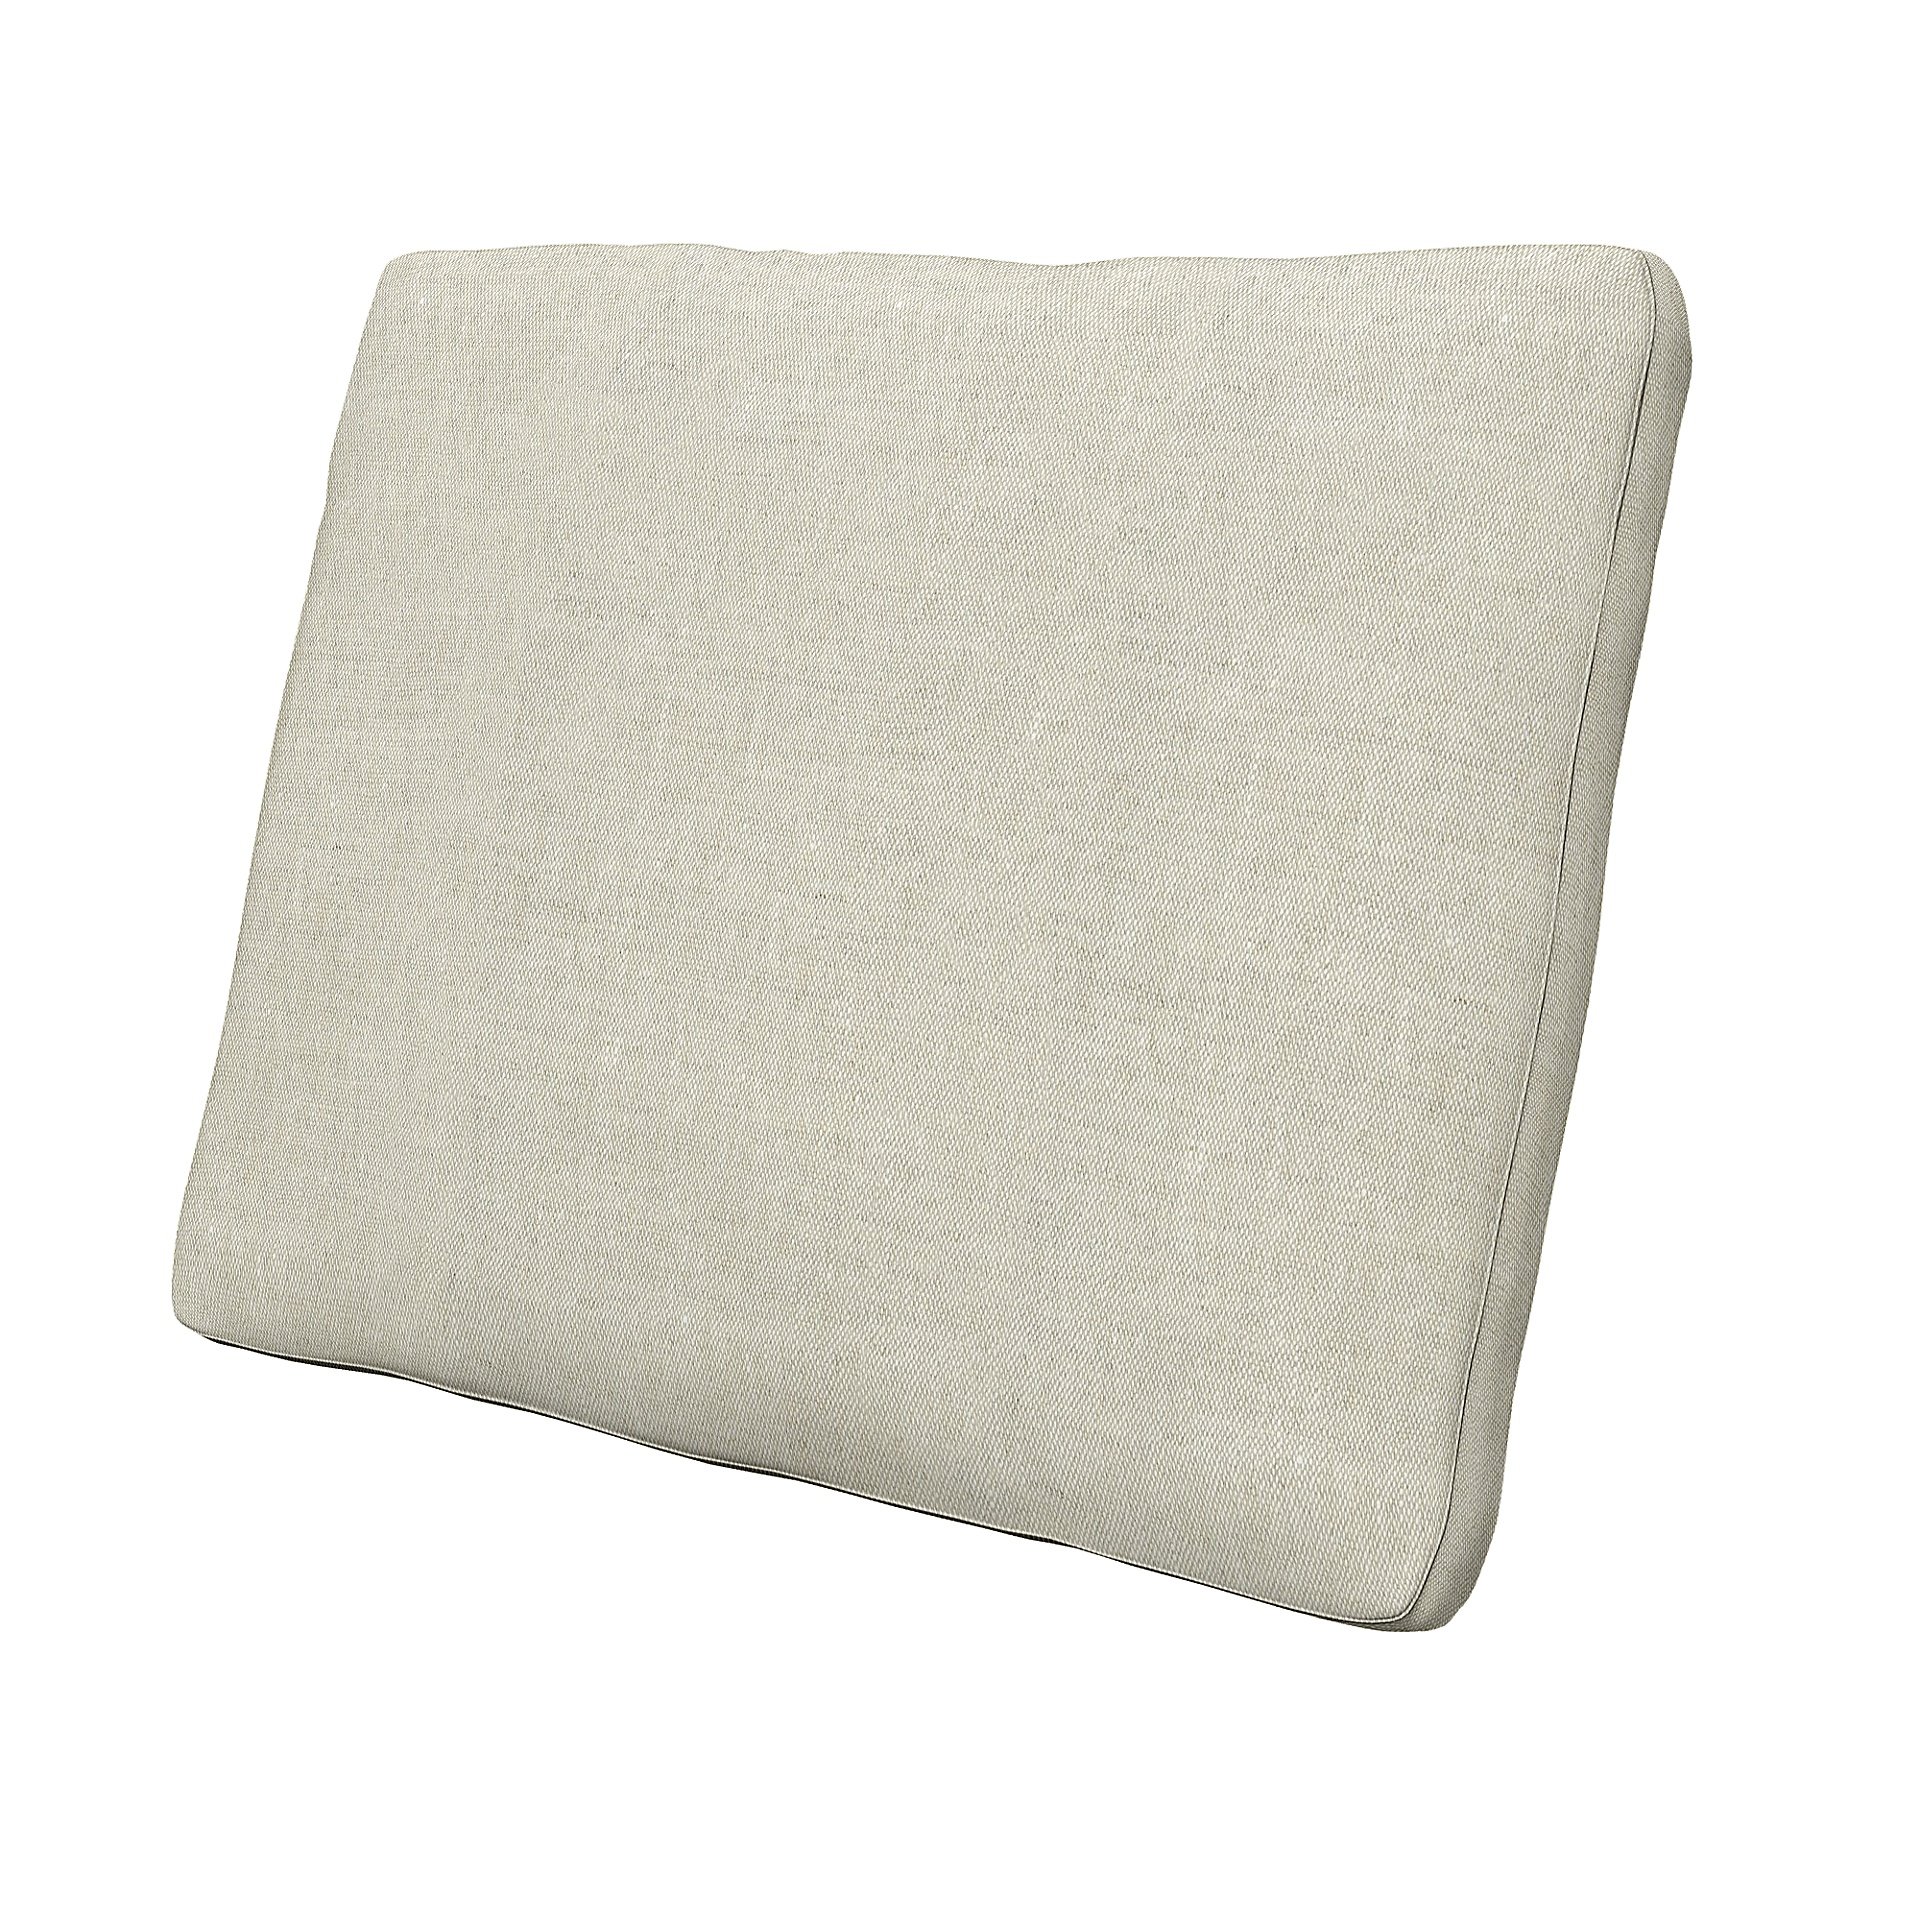 IKEA - Cushion Cover Karlstad 58x48x5 cm, Natural, Linen - Bemz